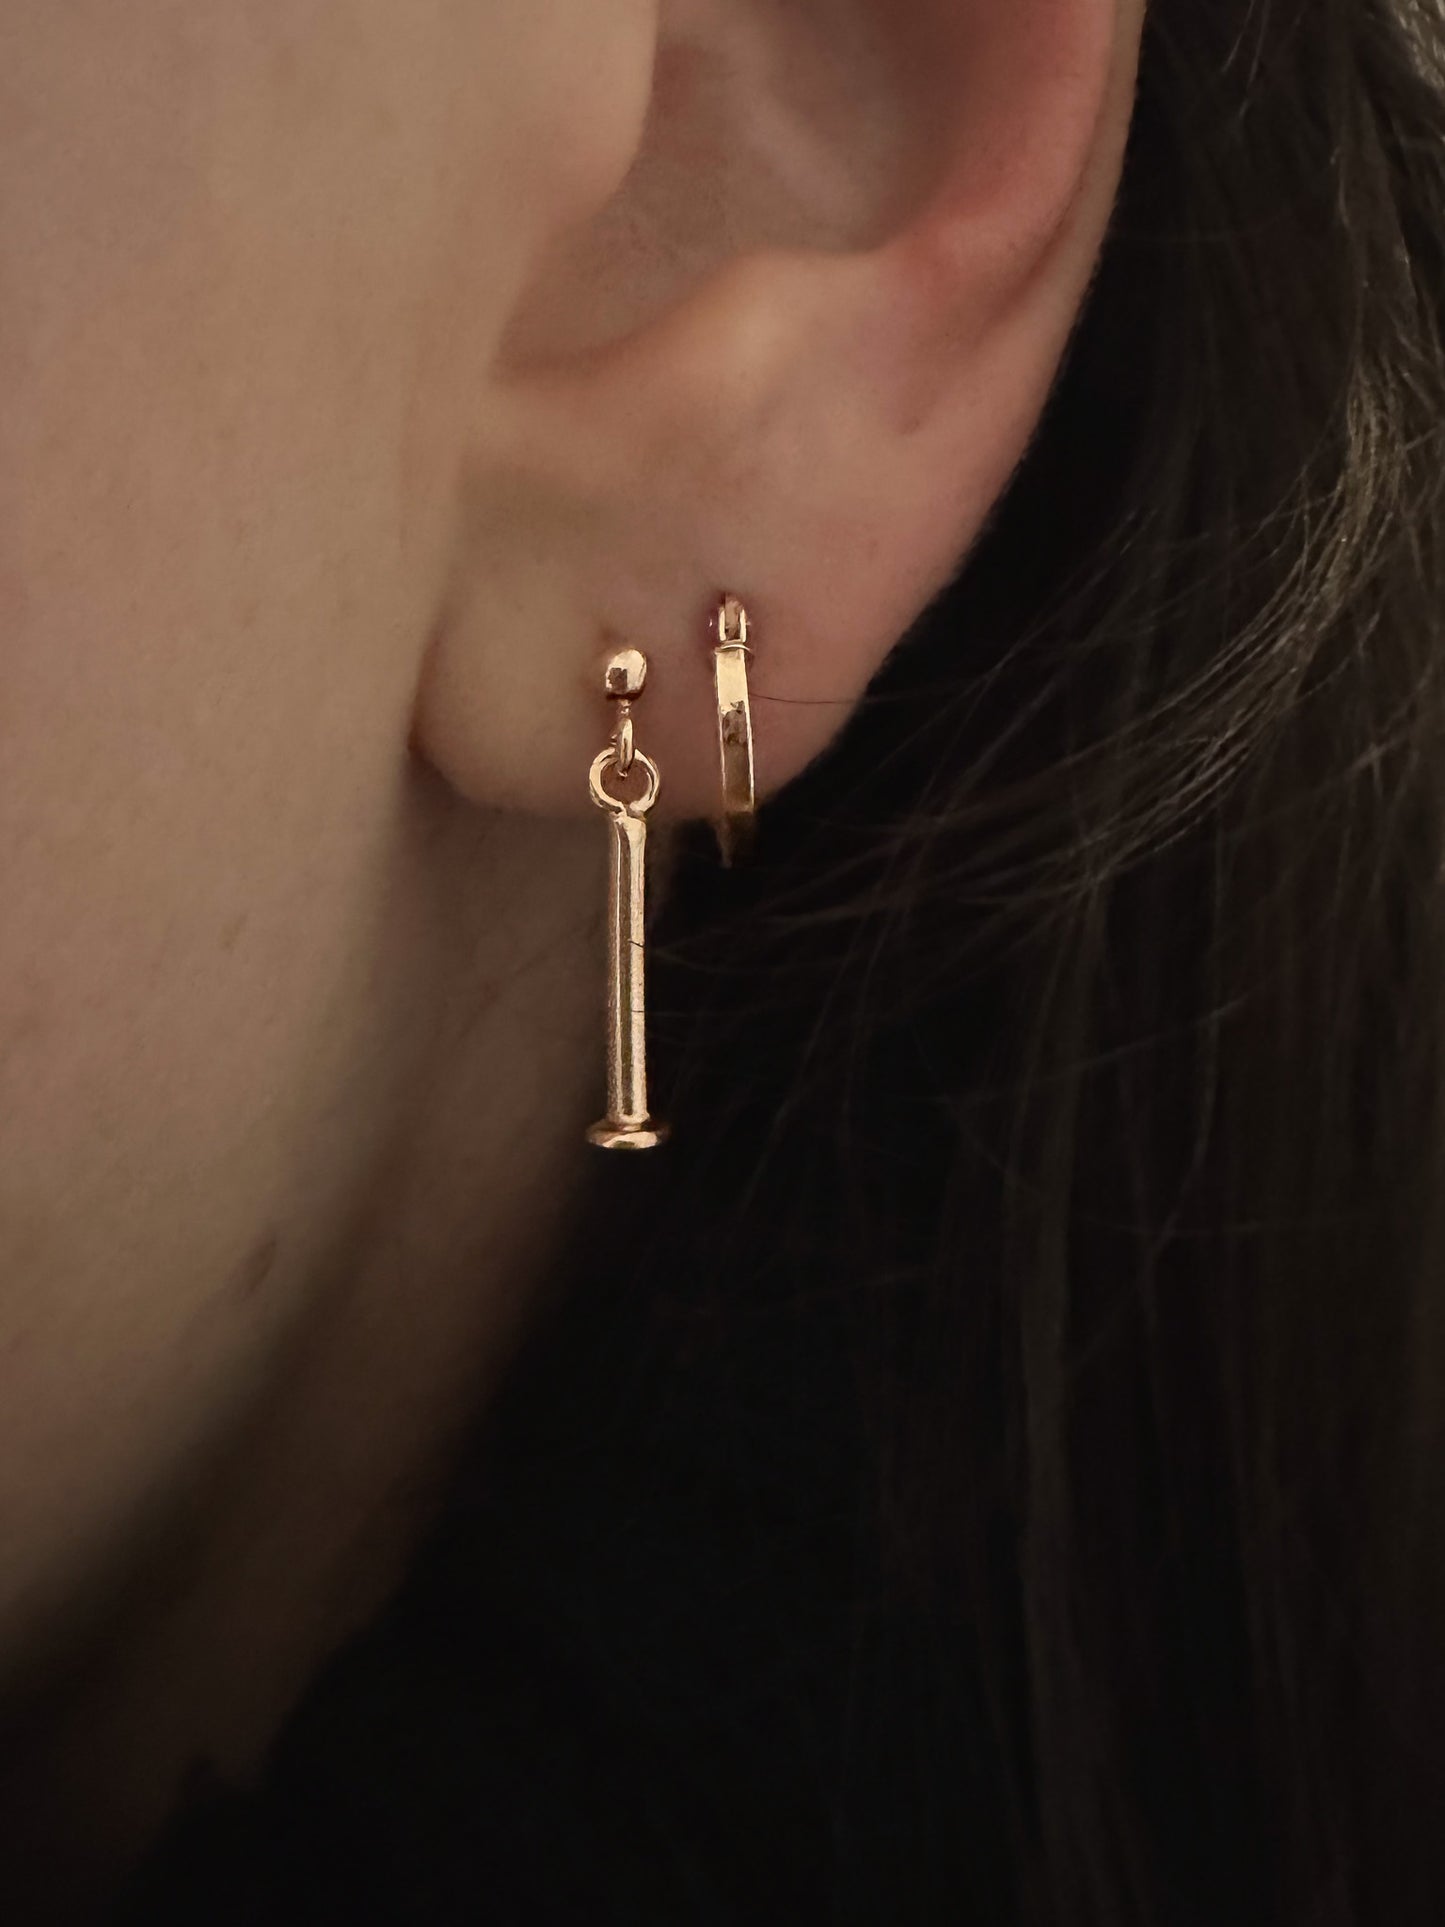 minimalist jewellery. minimalist earring and gold hoop earring. layered earrings.